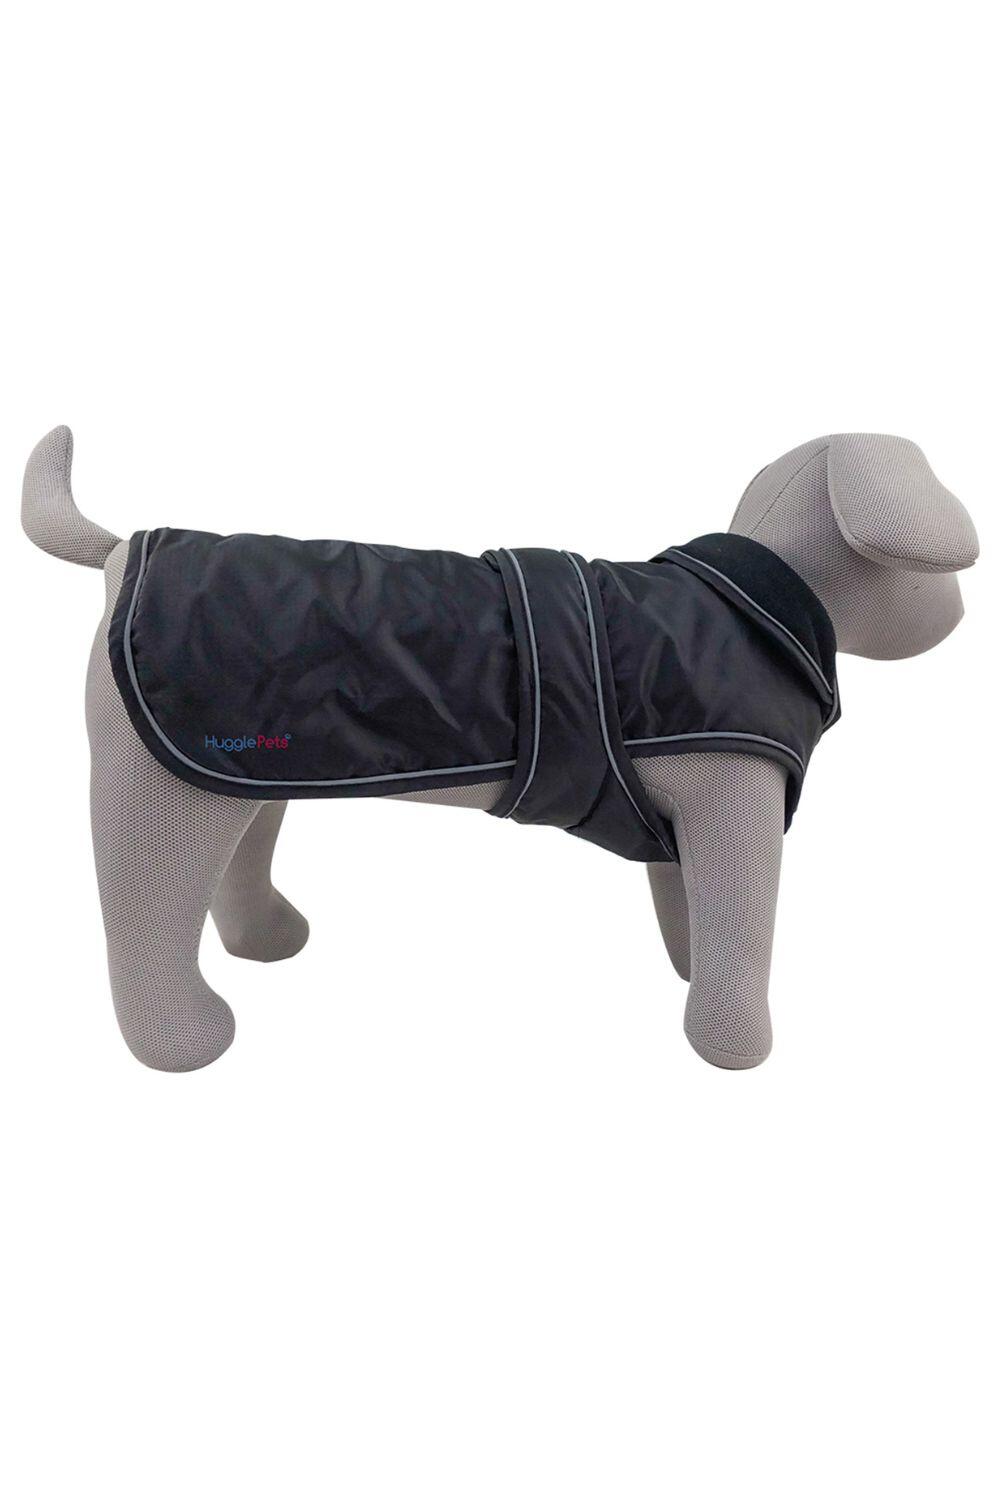 HugglePets Arctic Armour Dog Coat 1/7